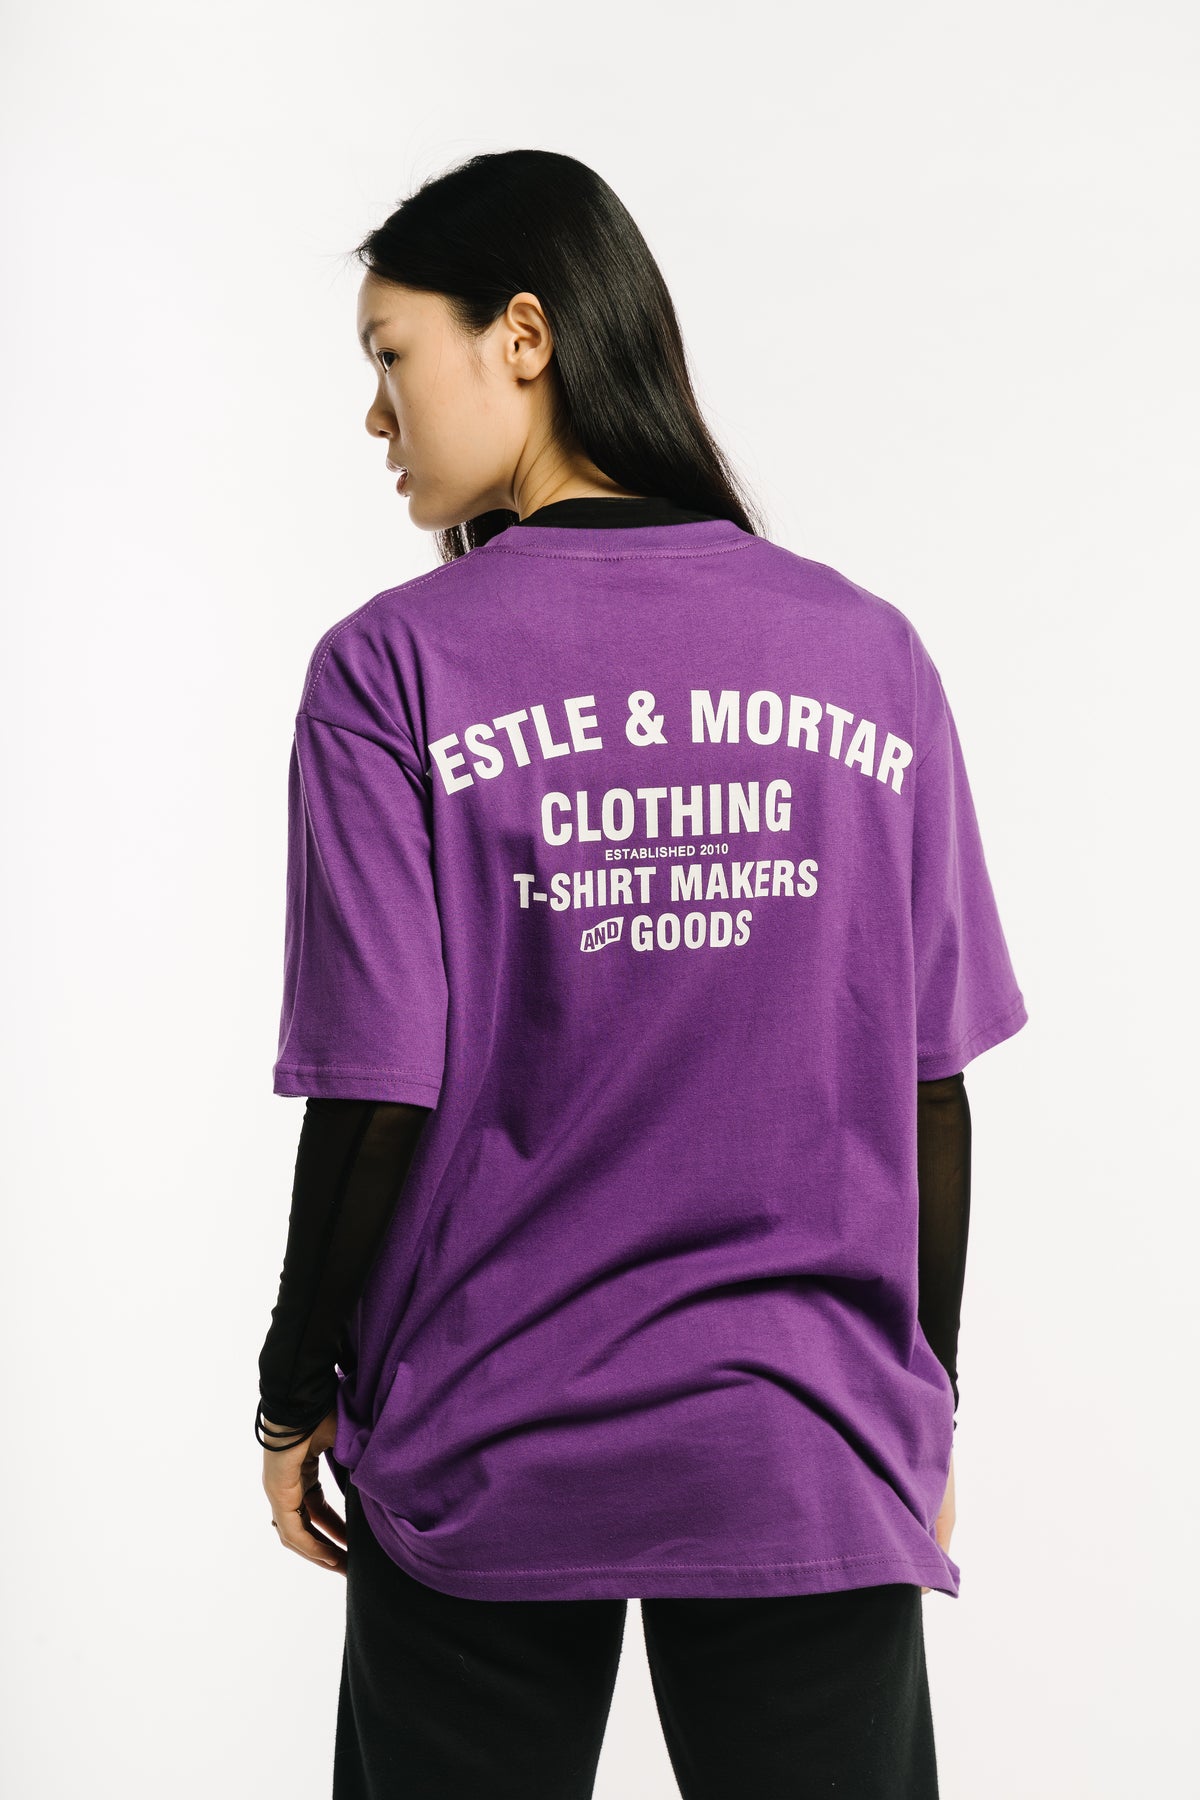 Men's Streetwear T-Shirts | Pestle & Mortar Clothing Malaysia